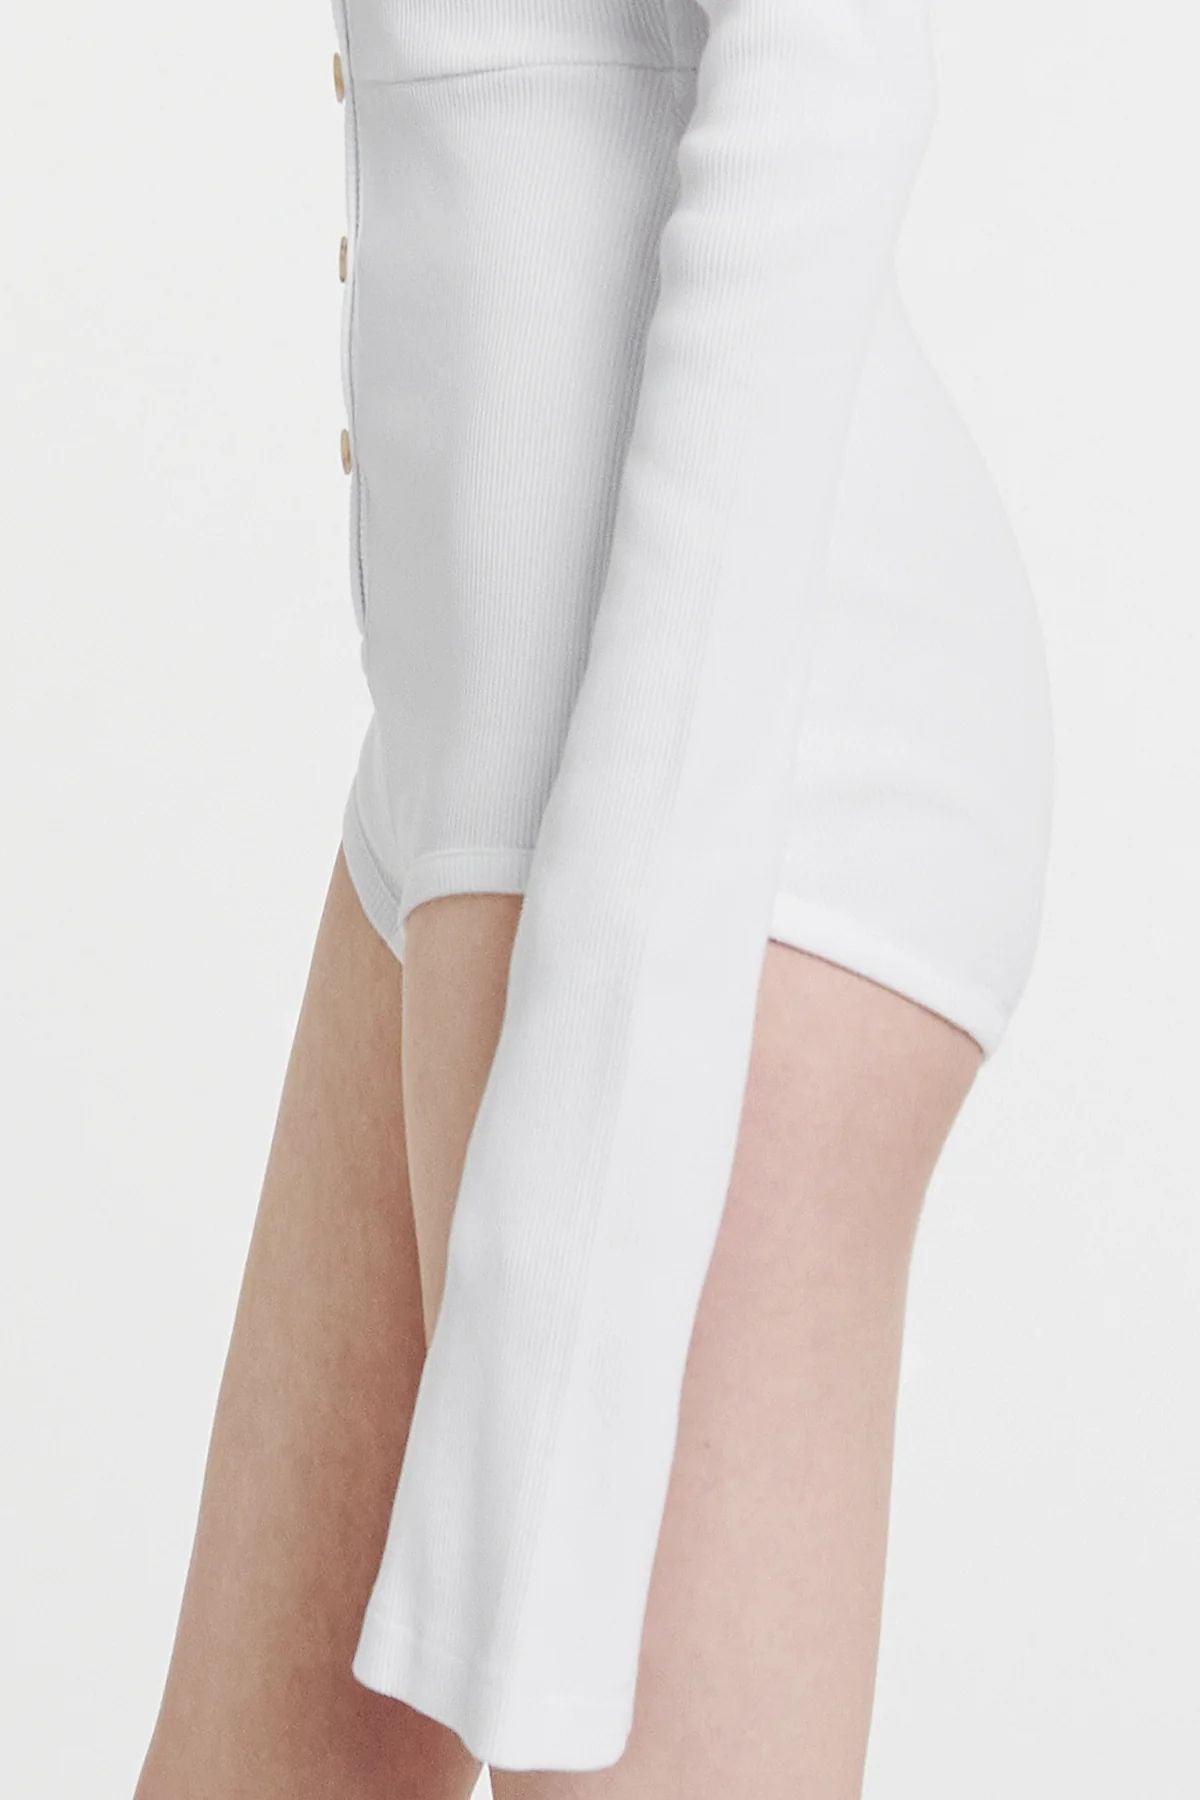 A.W.A.K.E Mode Bodysuit with Asymmetric Collar - White